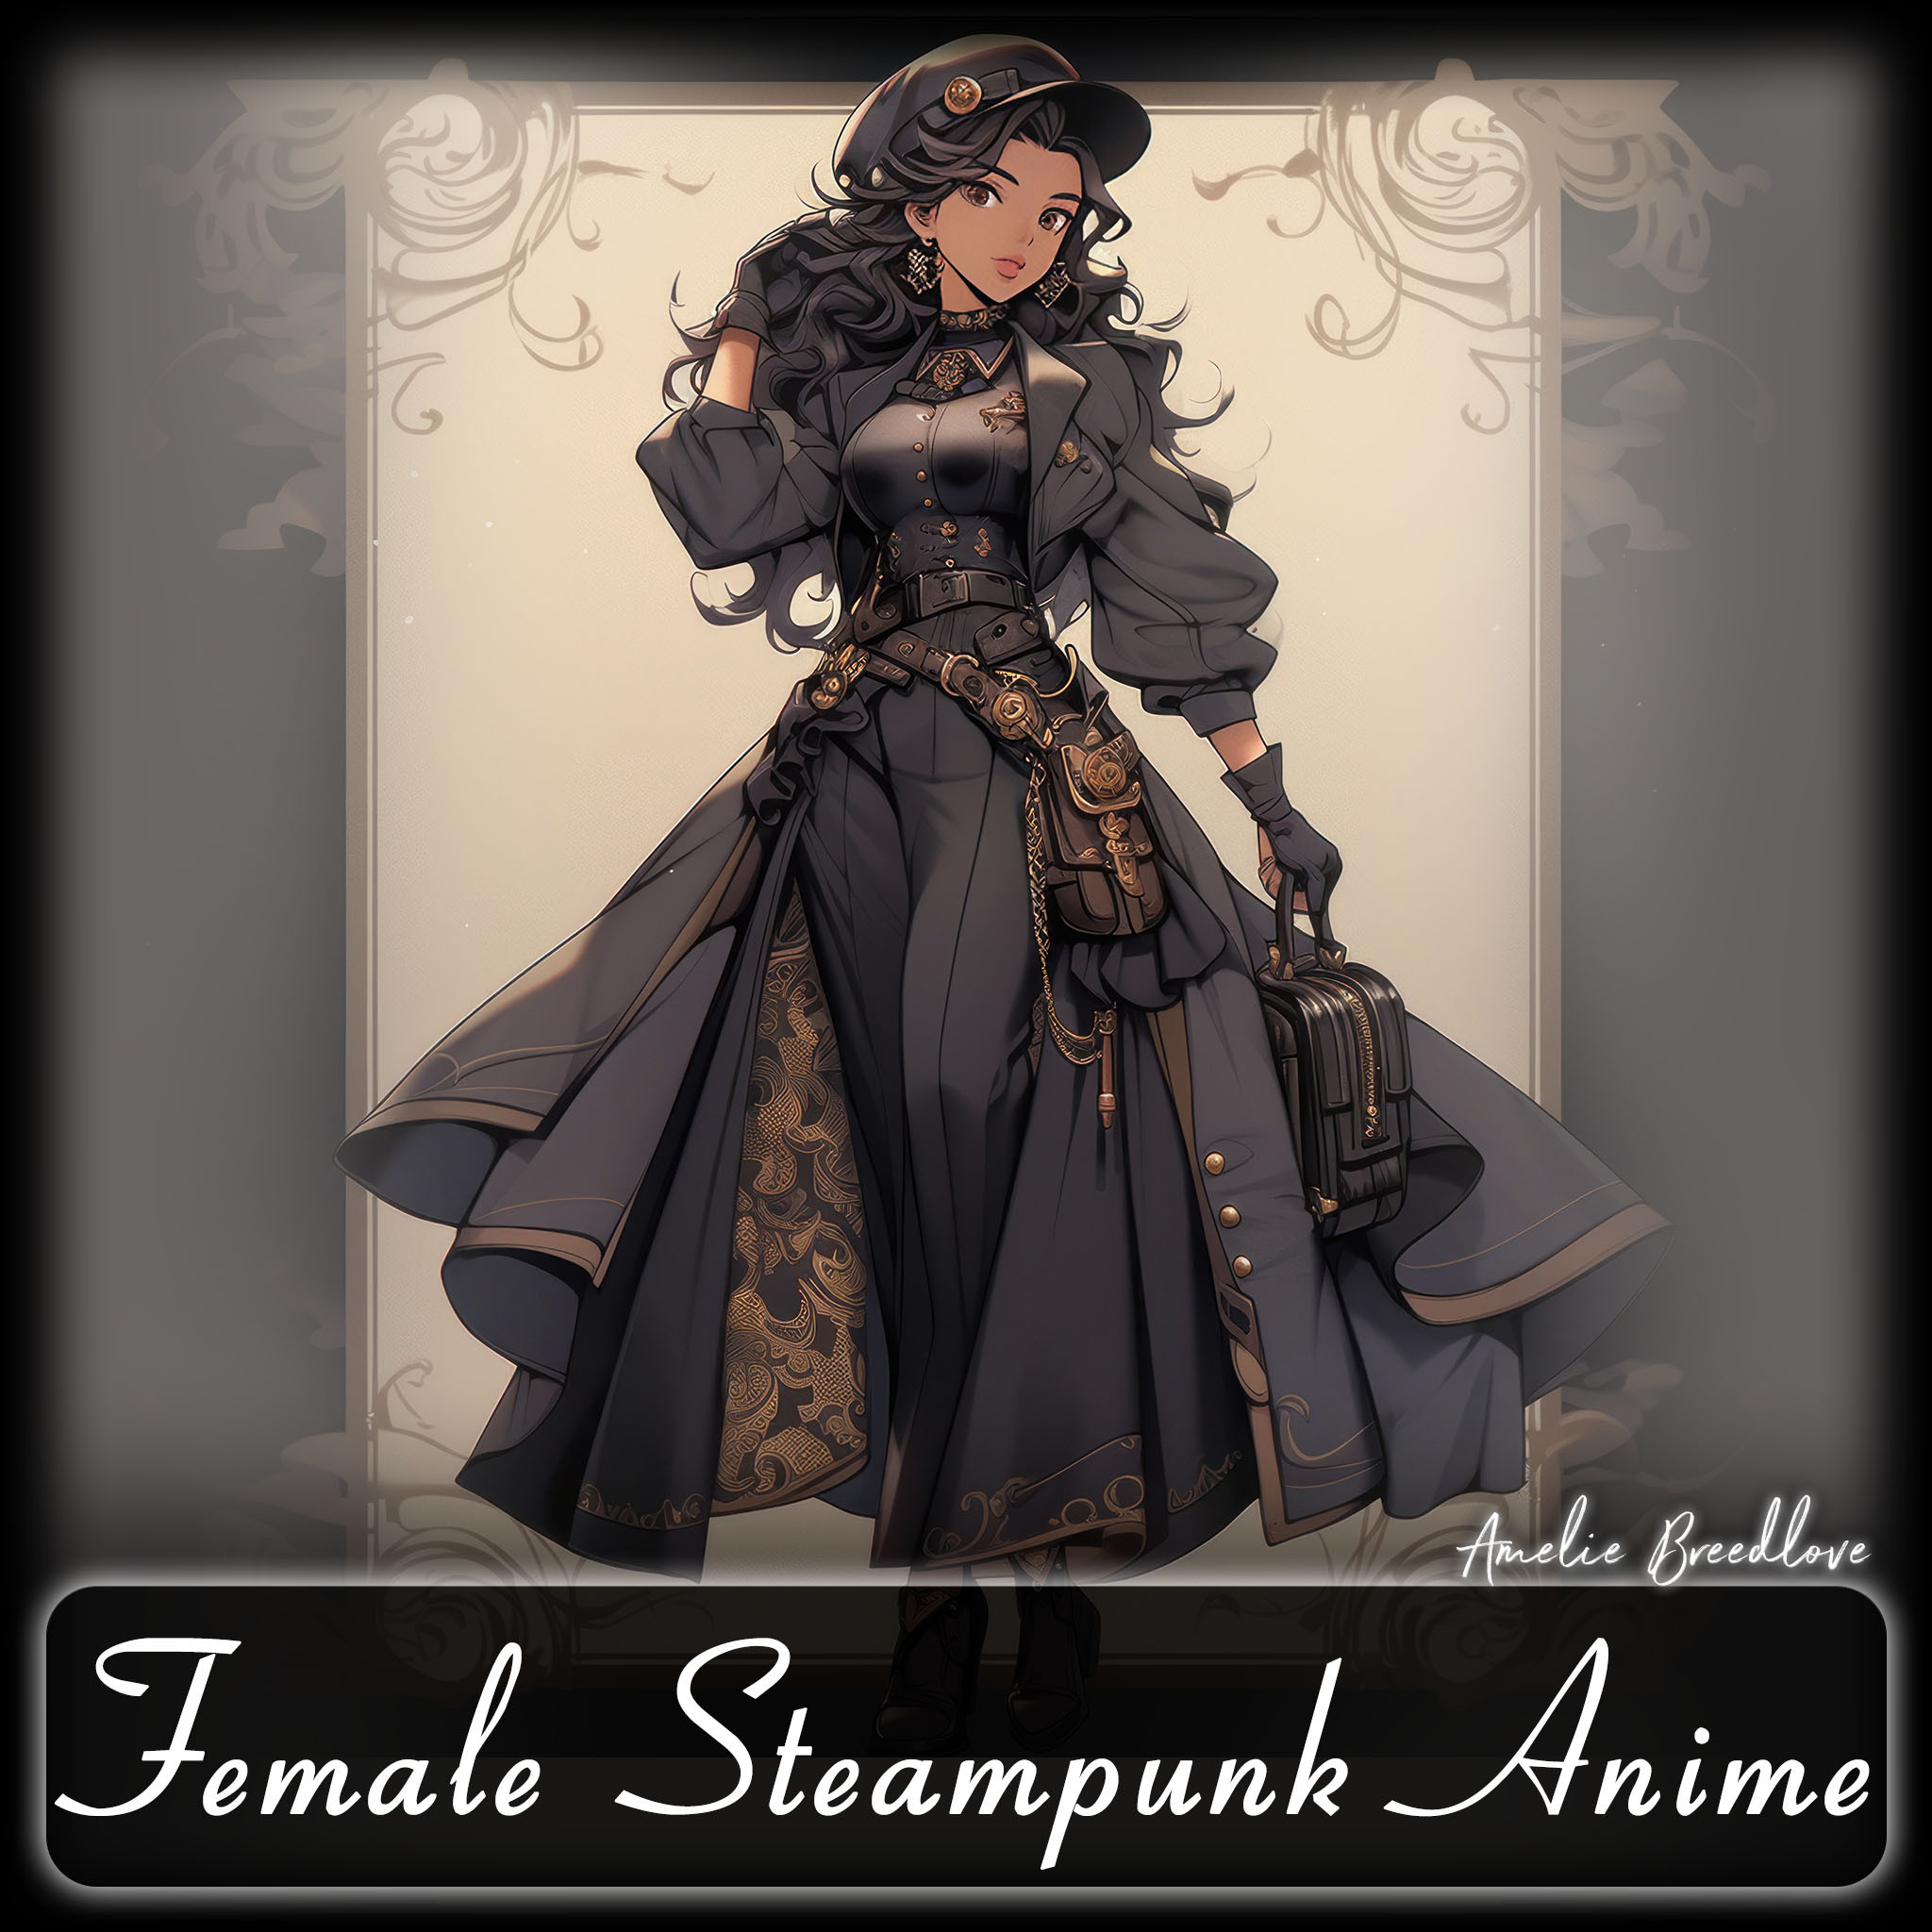 steampunk art is love #15 | Anime Amino